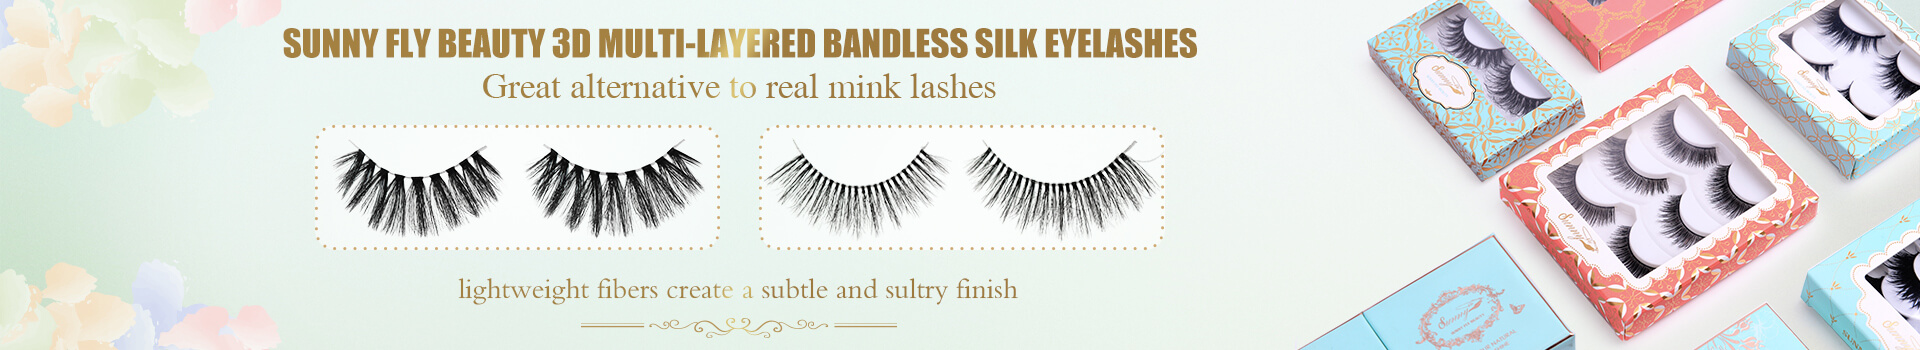 3D flerlags Bandless Silk Eyelashes TA09